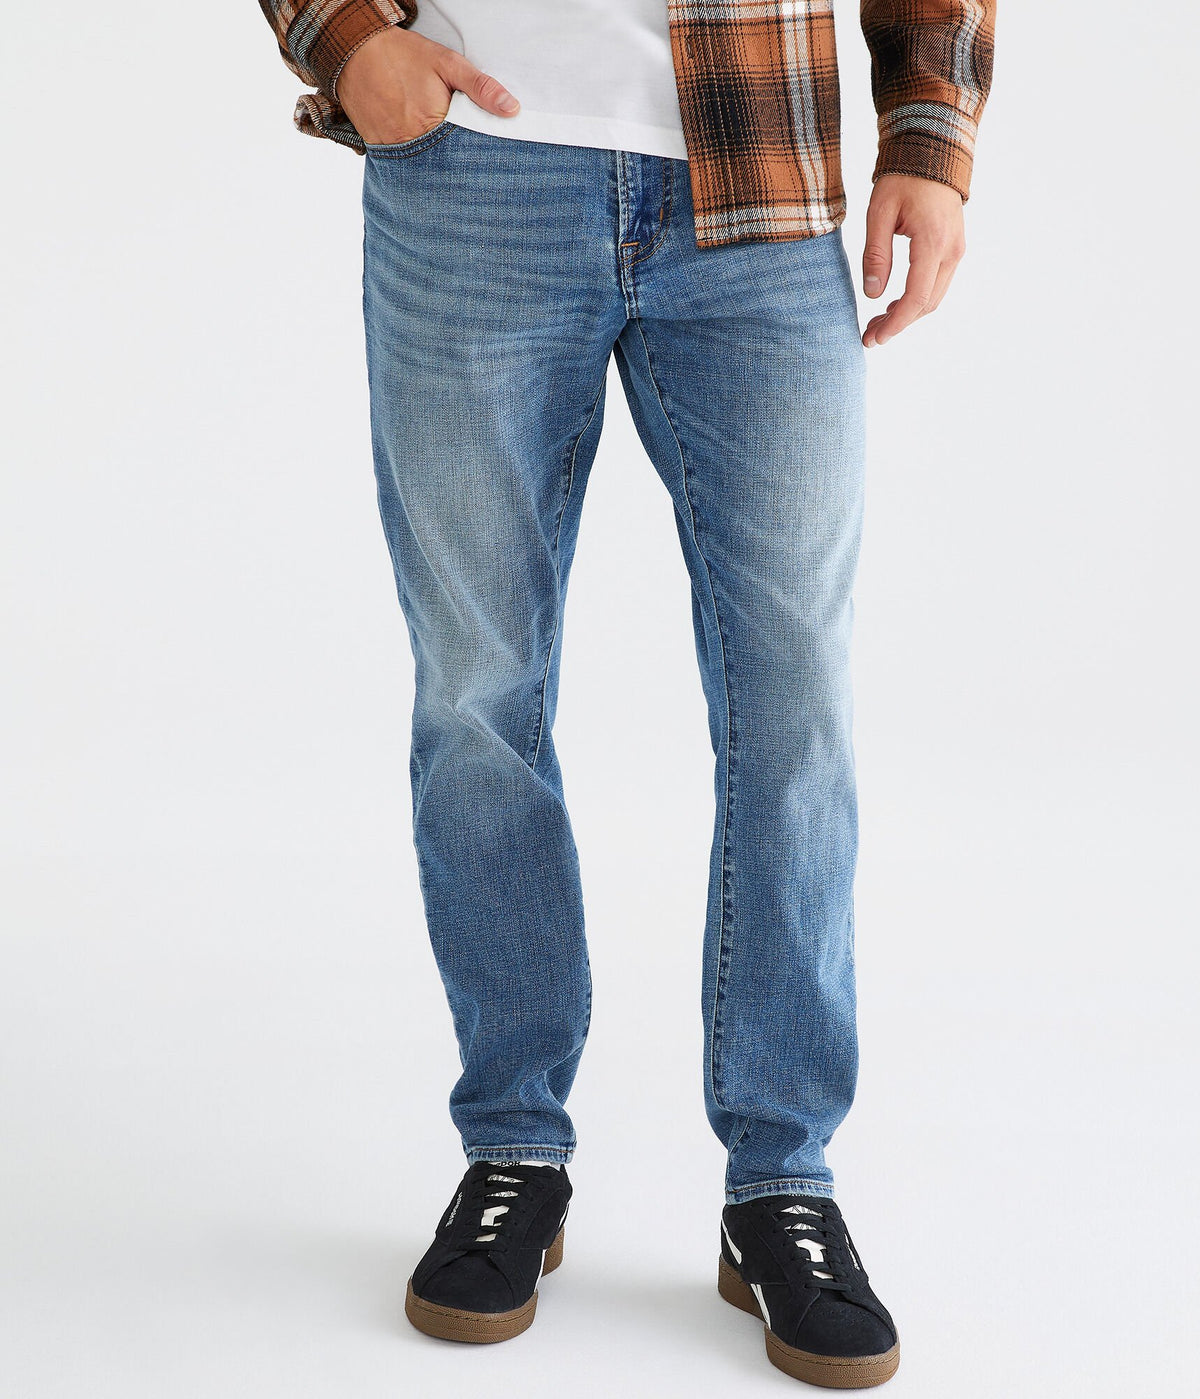 Aeropostale Mens' Athletic Skinny Jean - Washed Denim - Size 32X32 - Cotton - Teen Fashion & Clothing Medium Wash